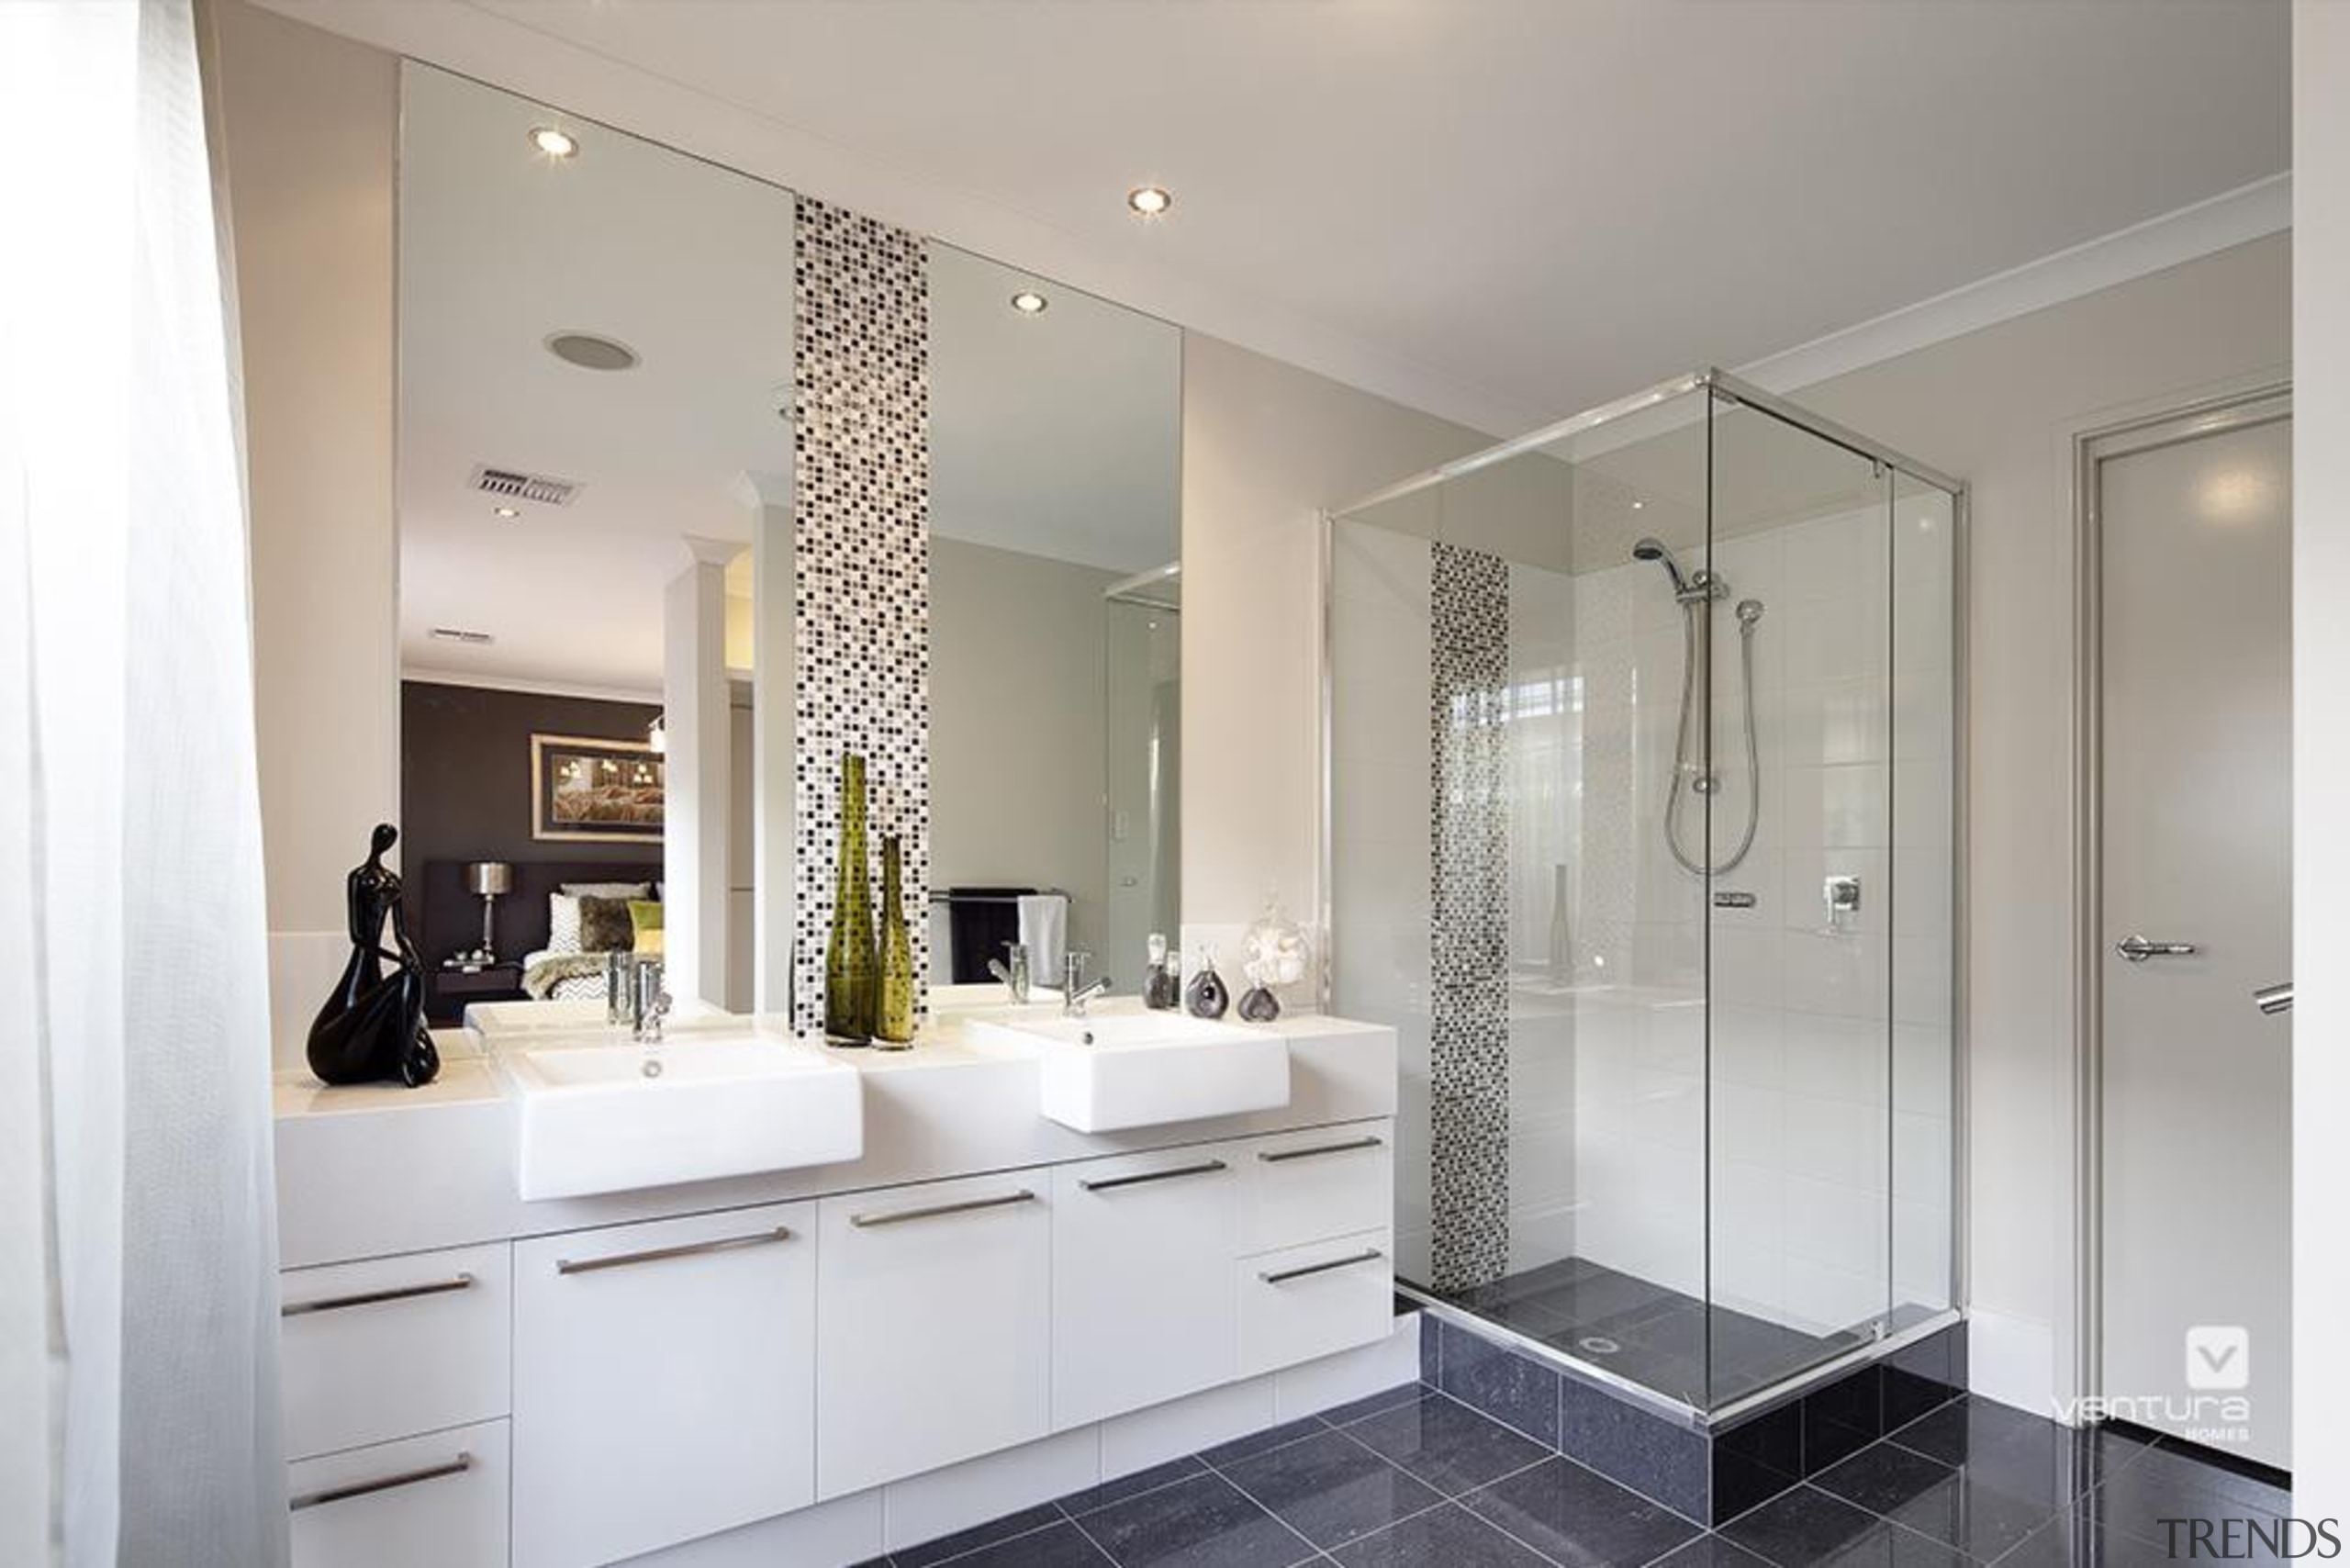 Ensuite design. - The Paramount Display Home - bathroom, home, interior design, real estate, room, sink, gray